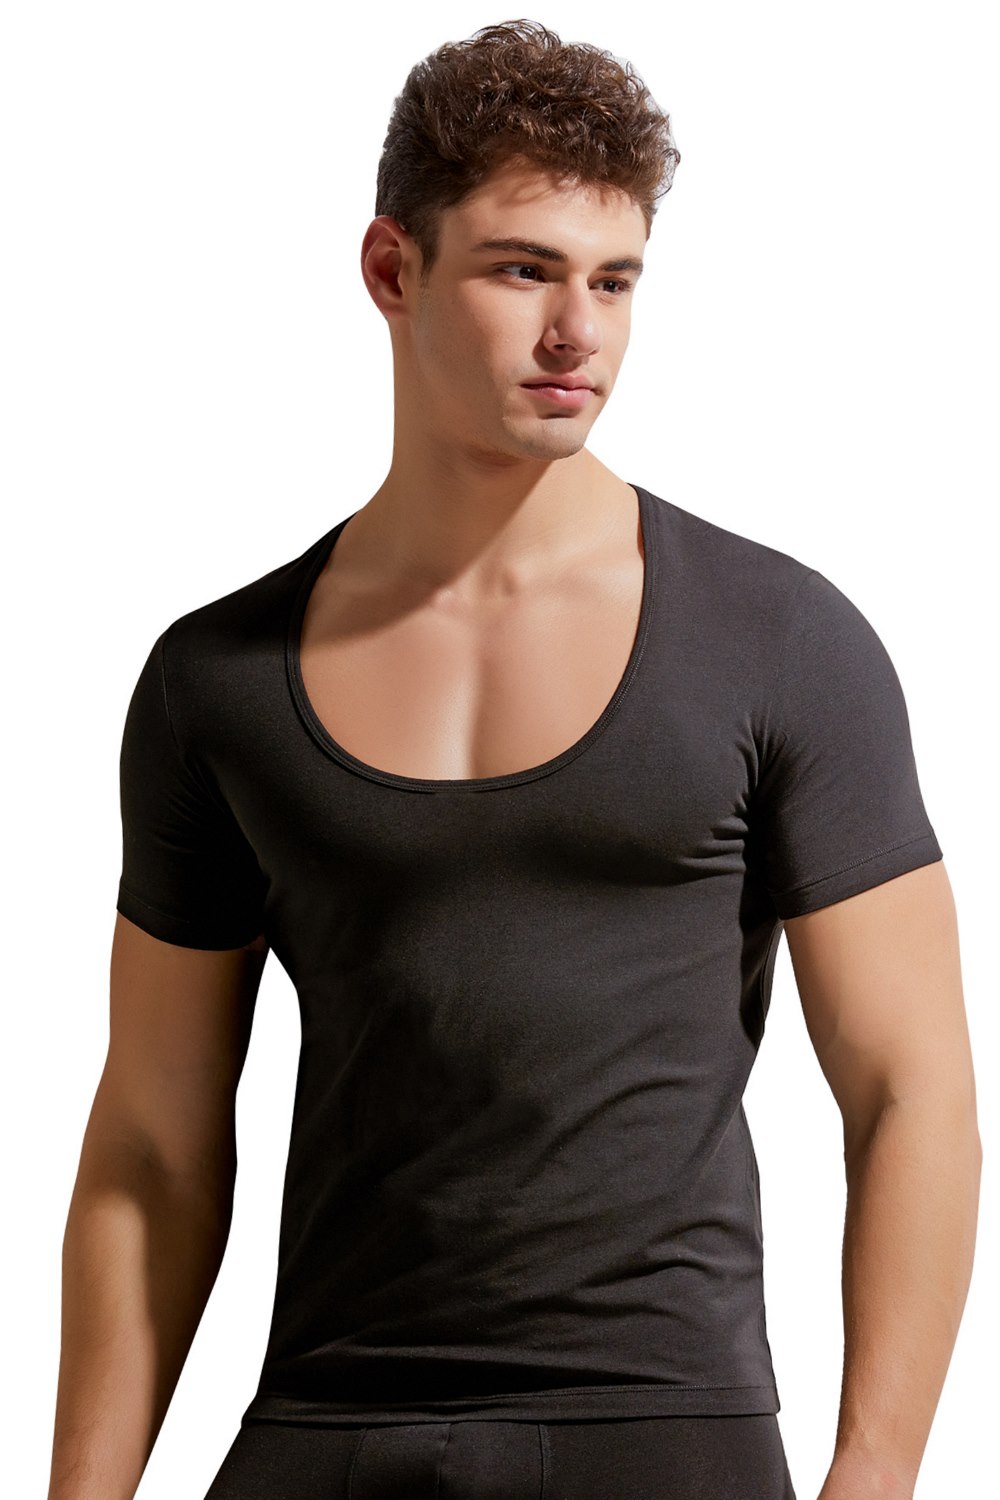 GAUVINE T-Shirt | shop at OBOY.com